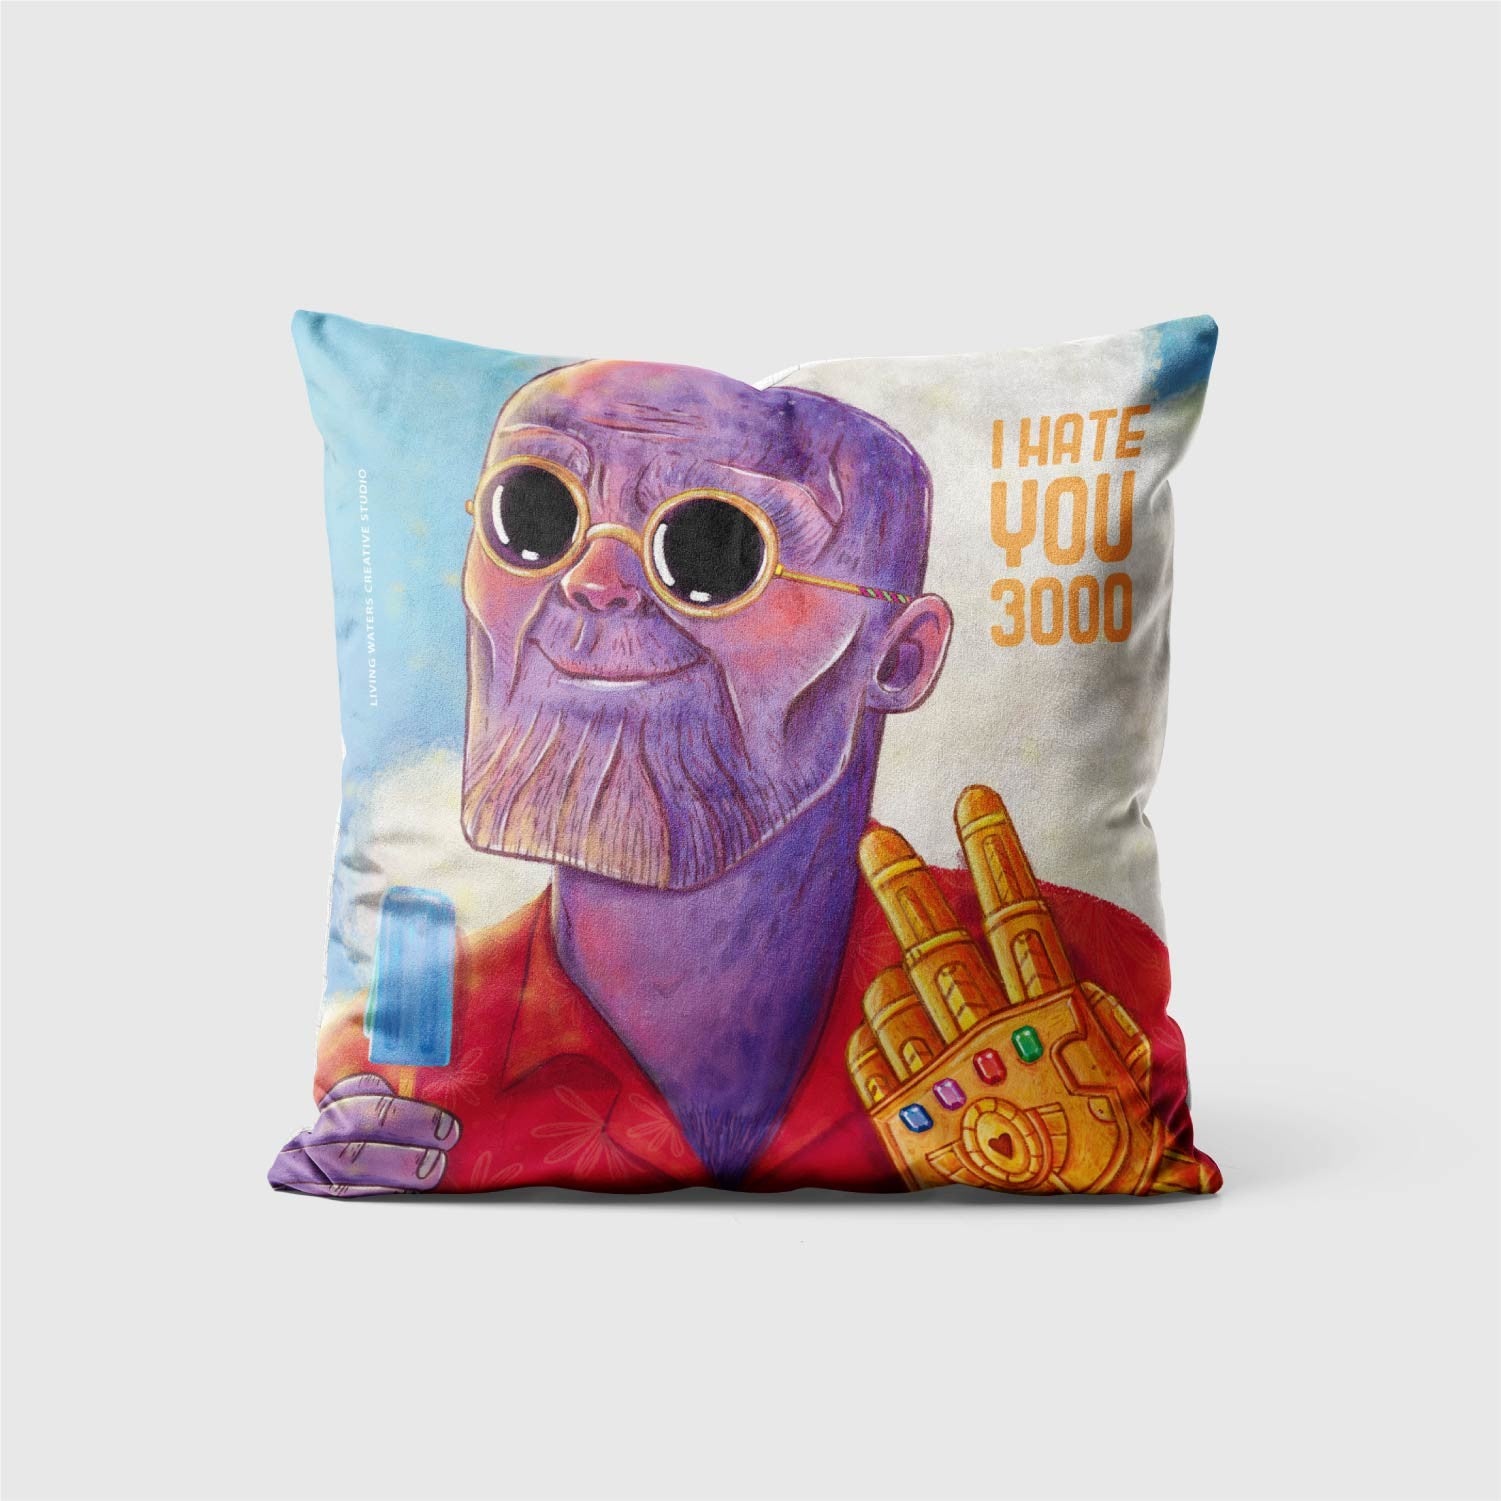 The Purple Cushion Cover